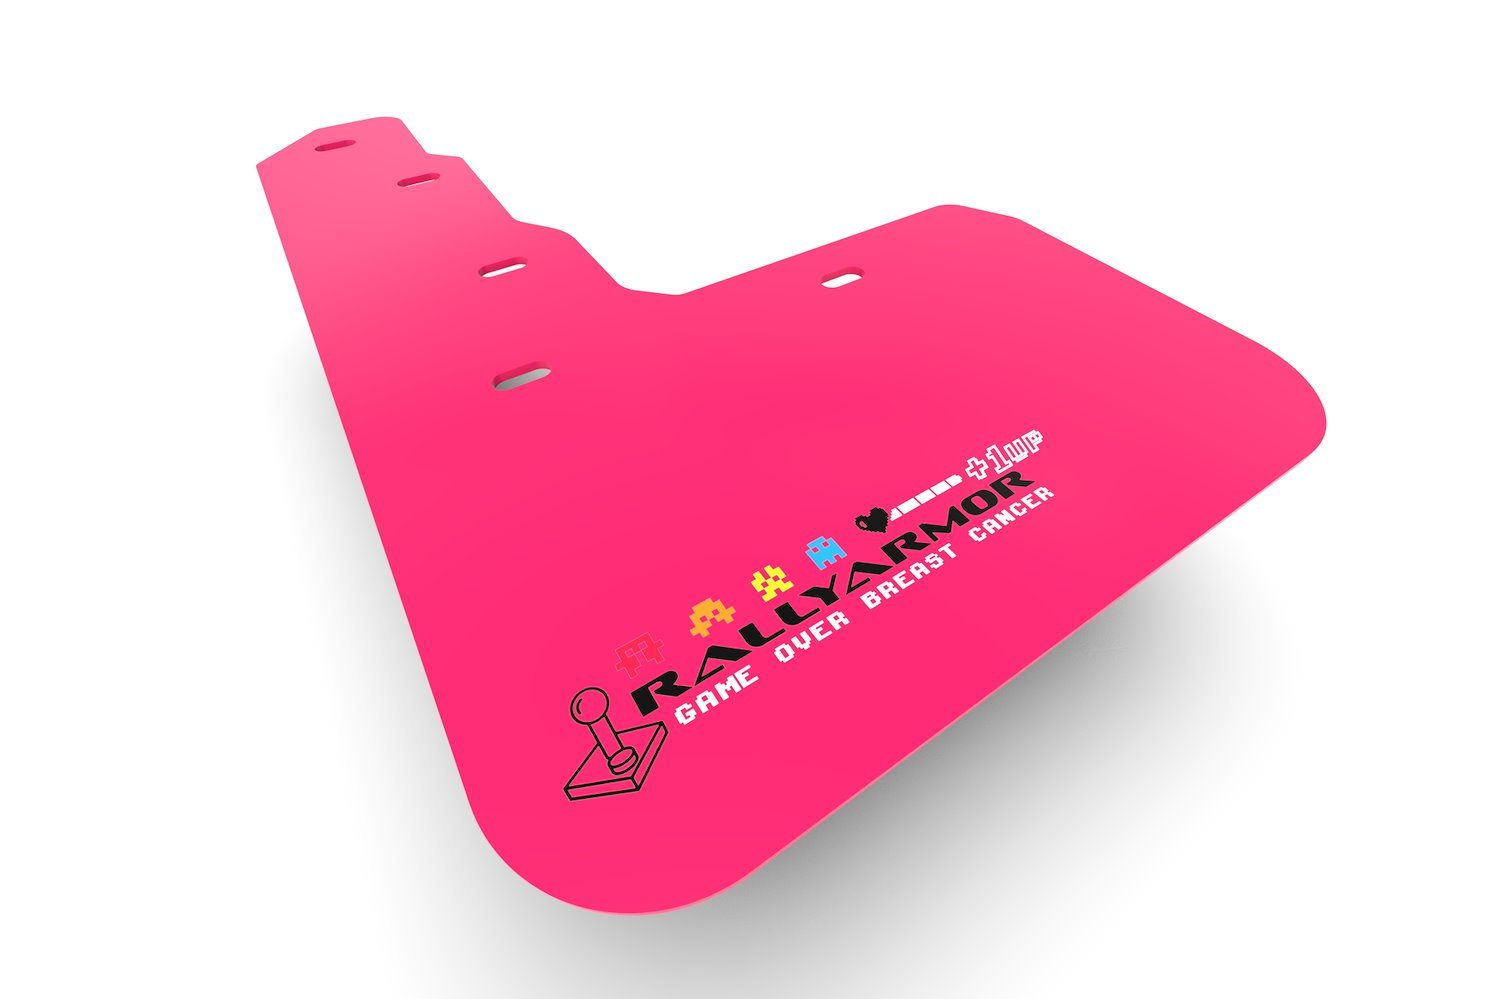 MF6-BCE22-PK/BLK Mud Flap Kit with BCE Logo for 2008-2011 Subaru Impreza/WRX - Pink Mud Flap/Breast Cancer Logo